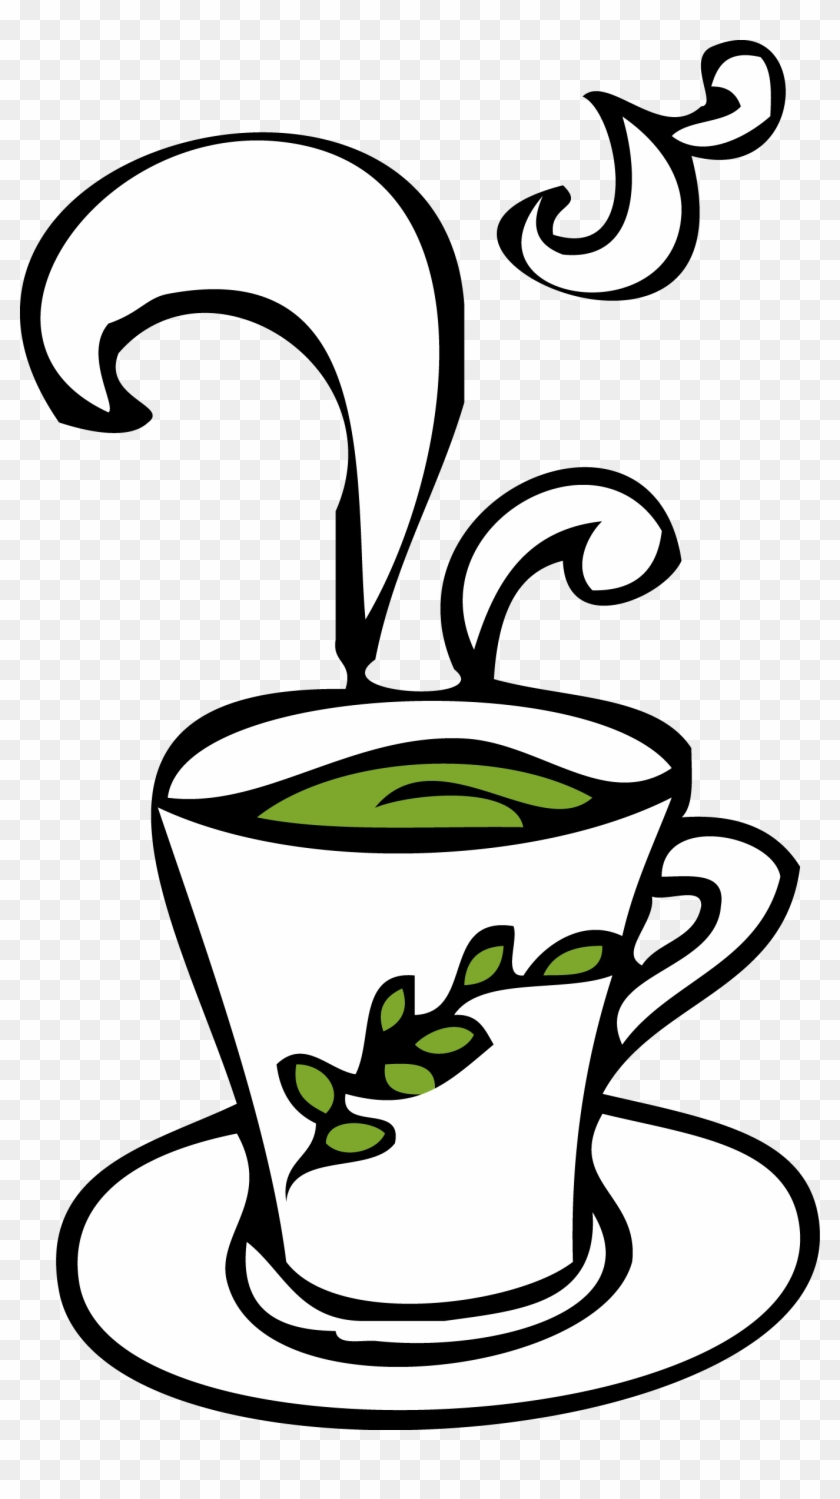 Green Tea Cartoon Clip Art - Green Tea Cartoon Clip Art #568498